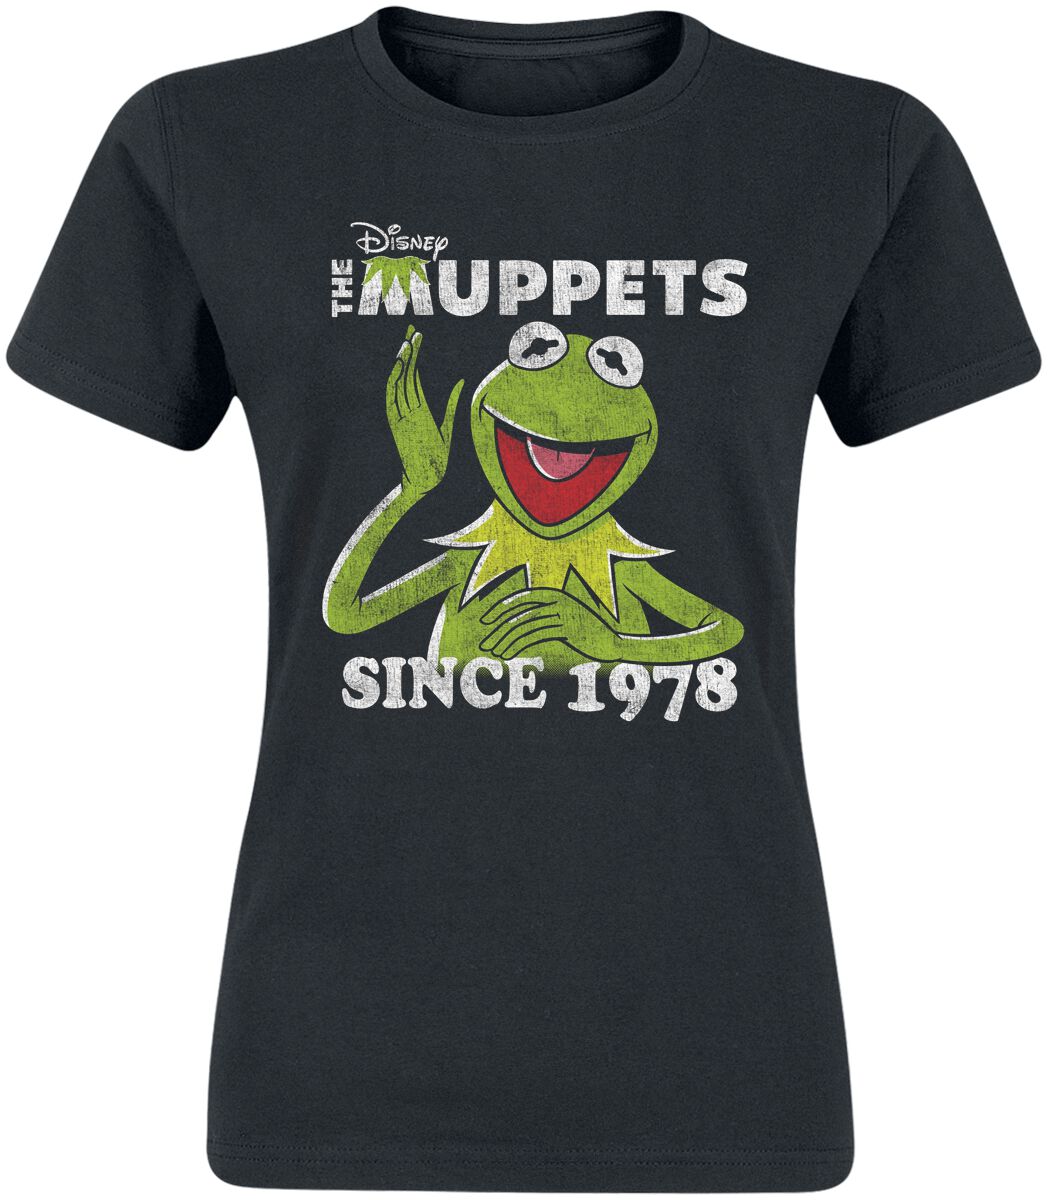 The Muppets Kermit Since 1978 T-Shirt black